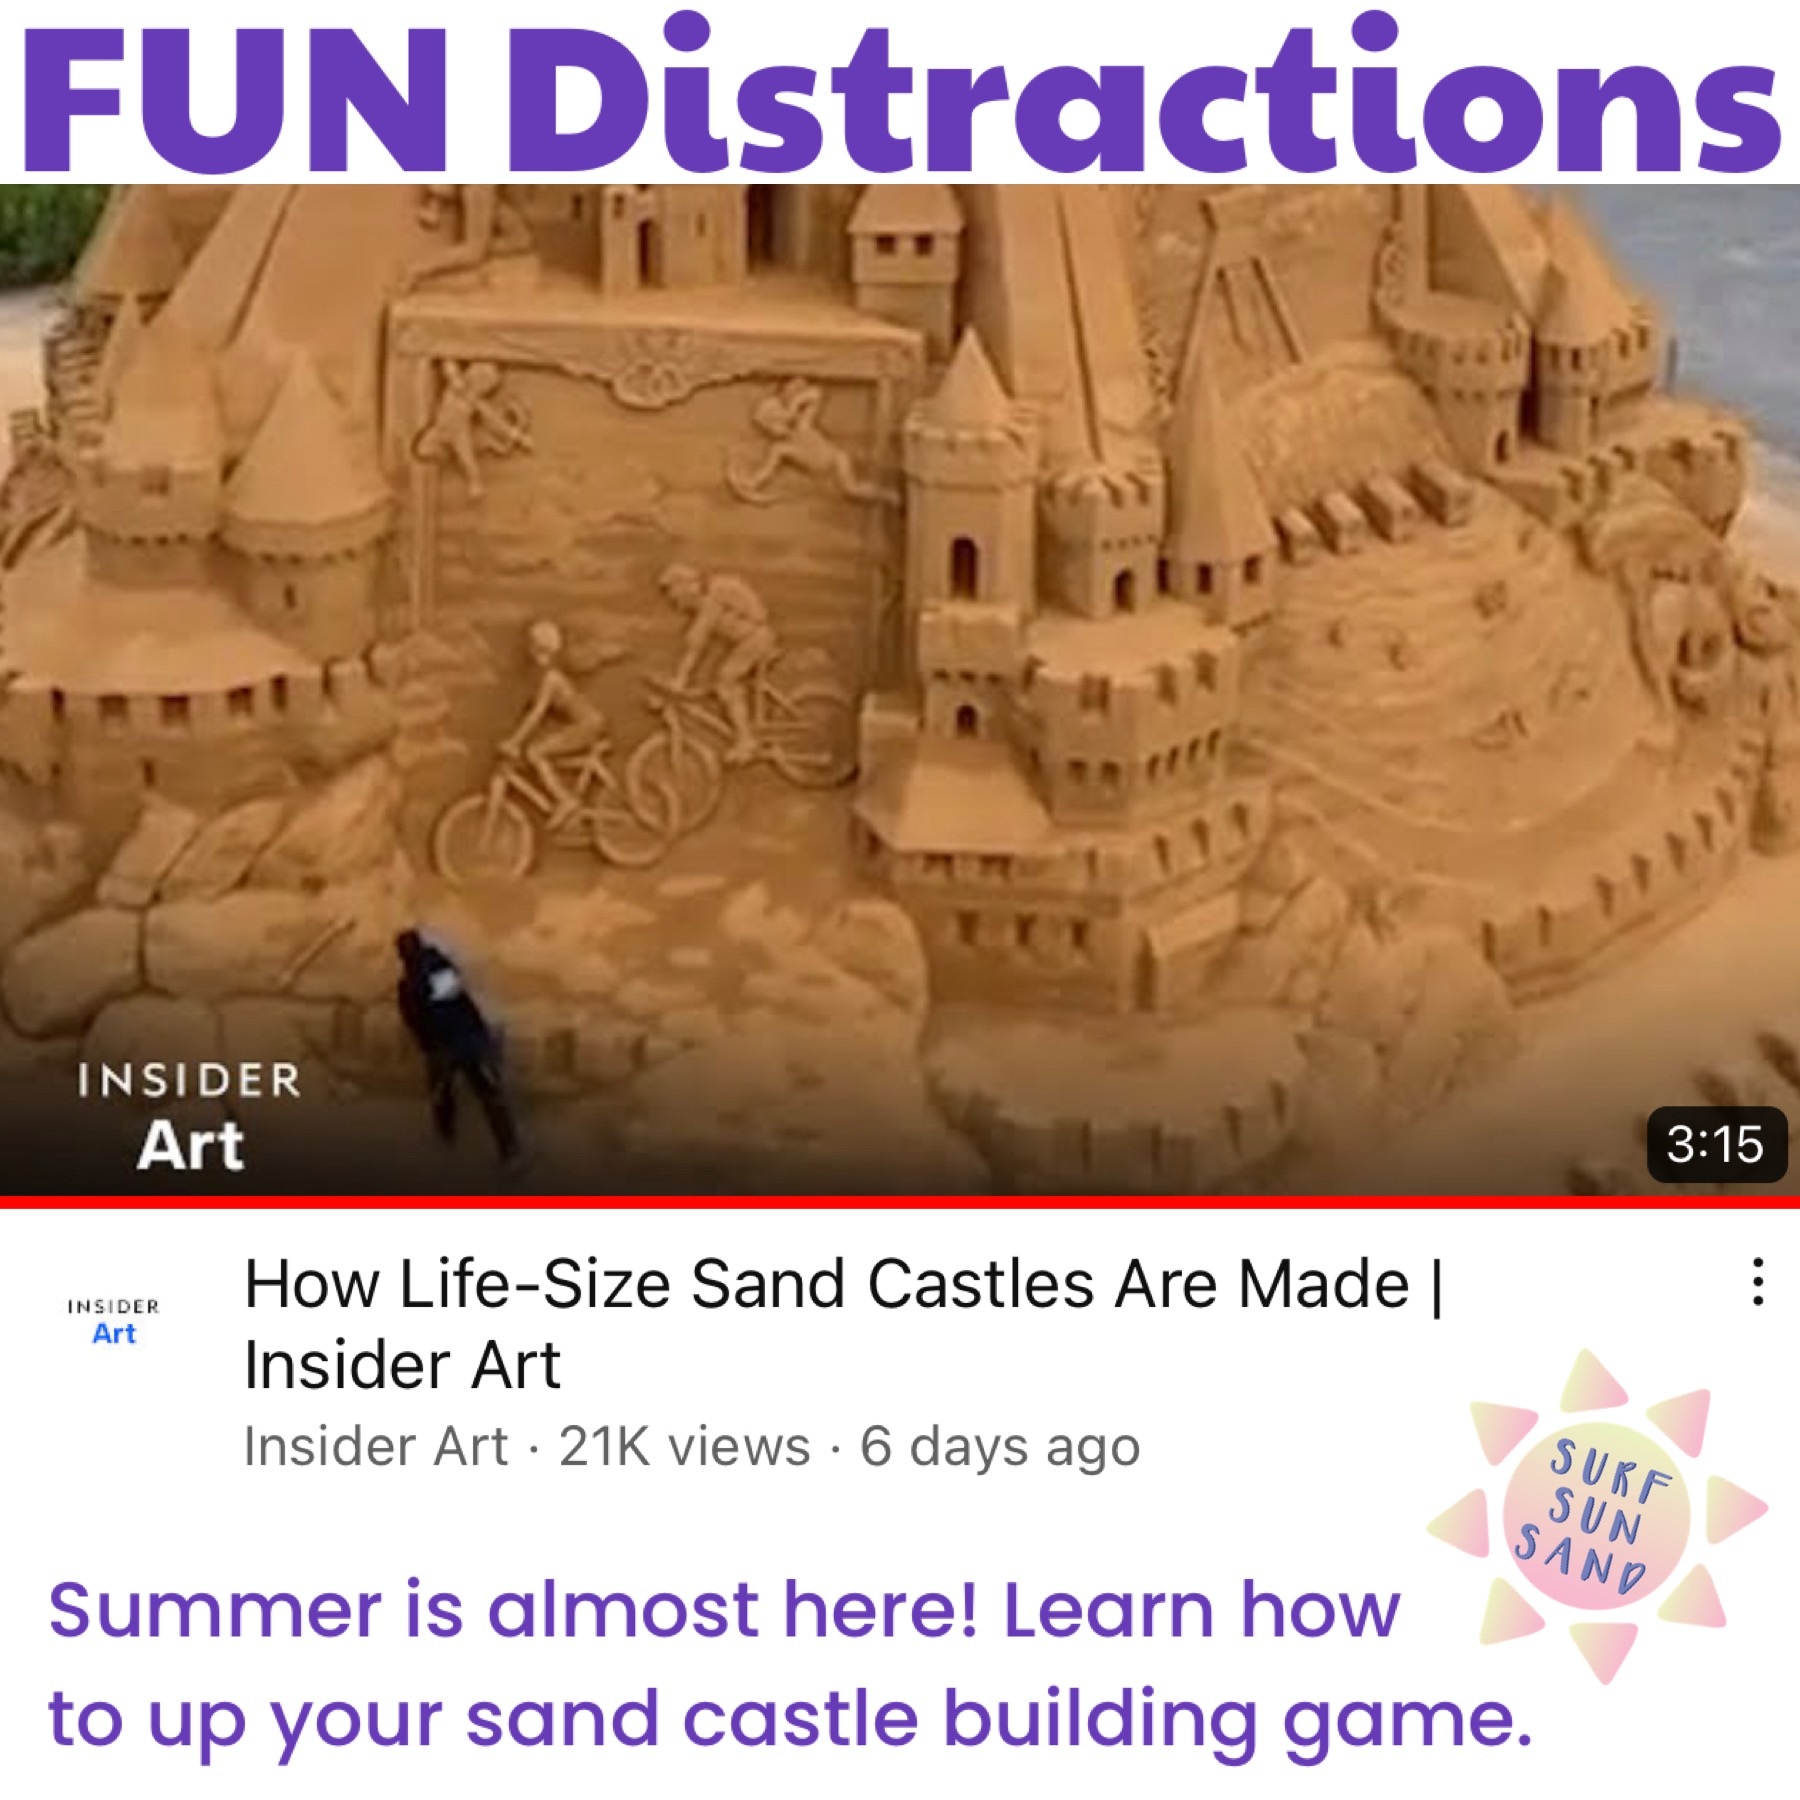 Image of a sand castle